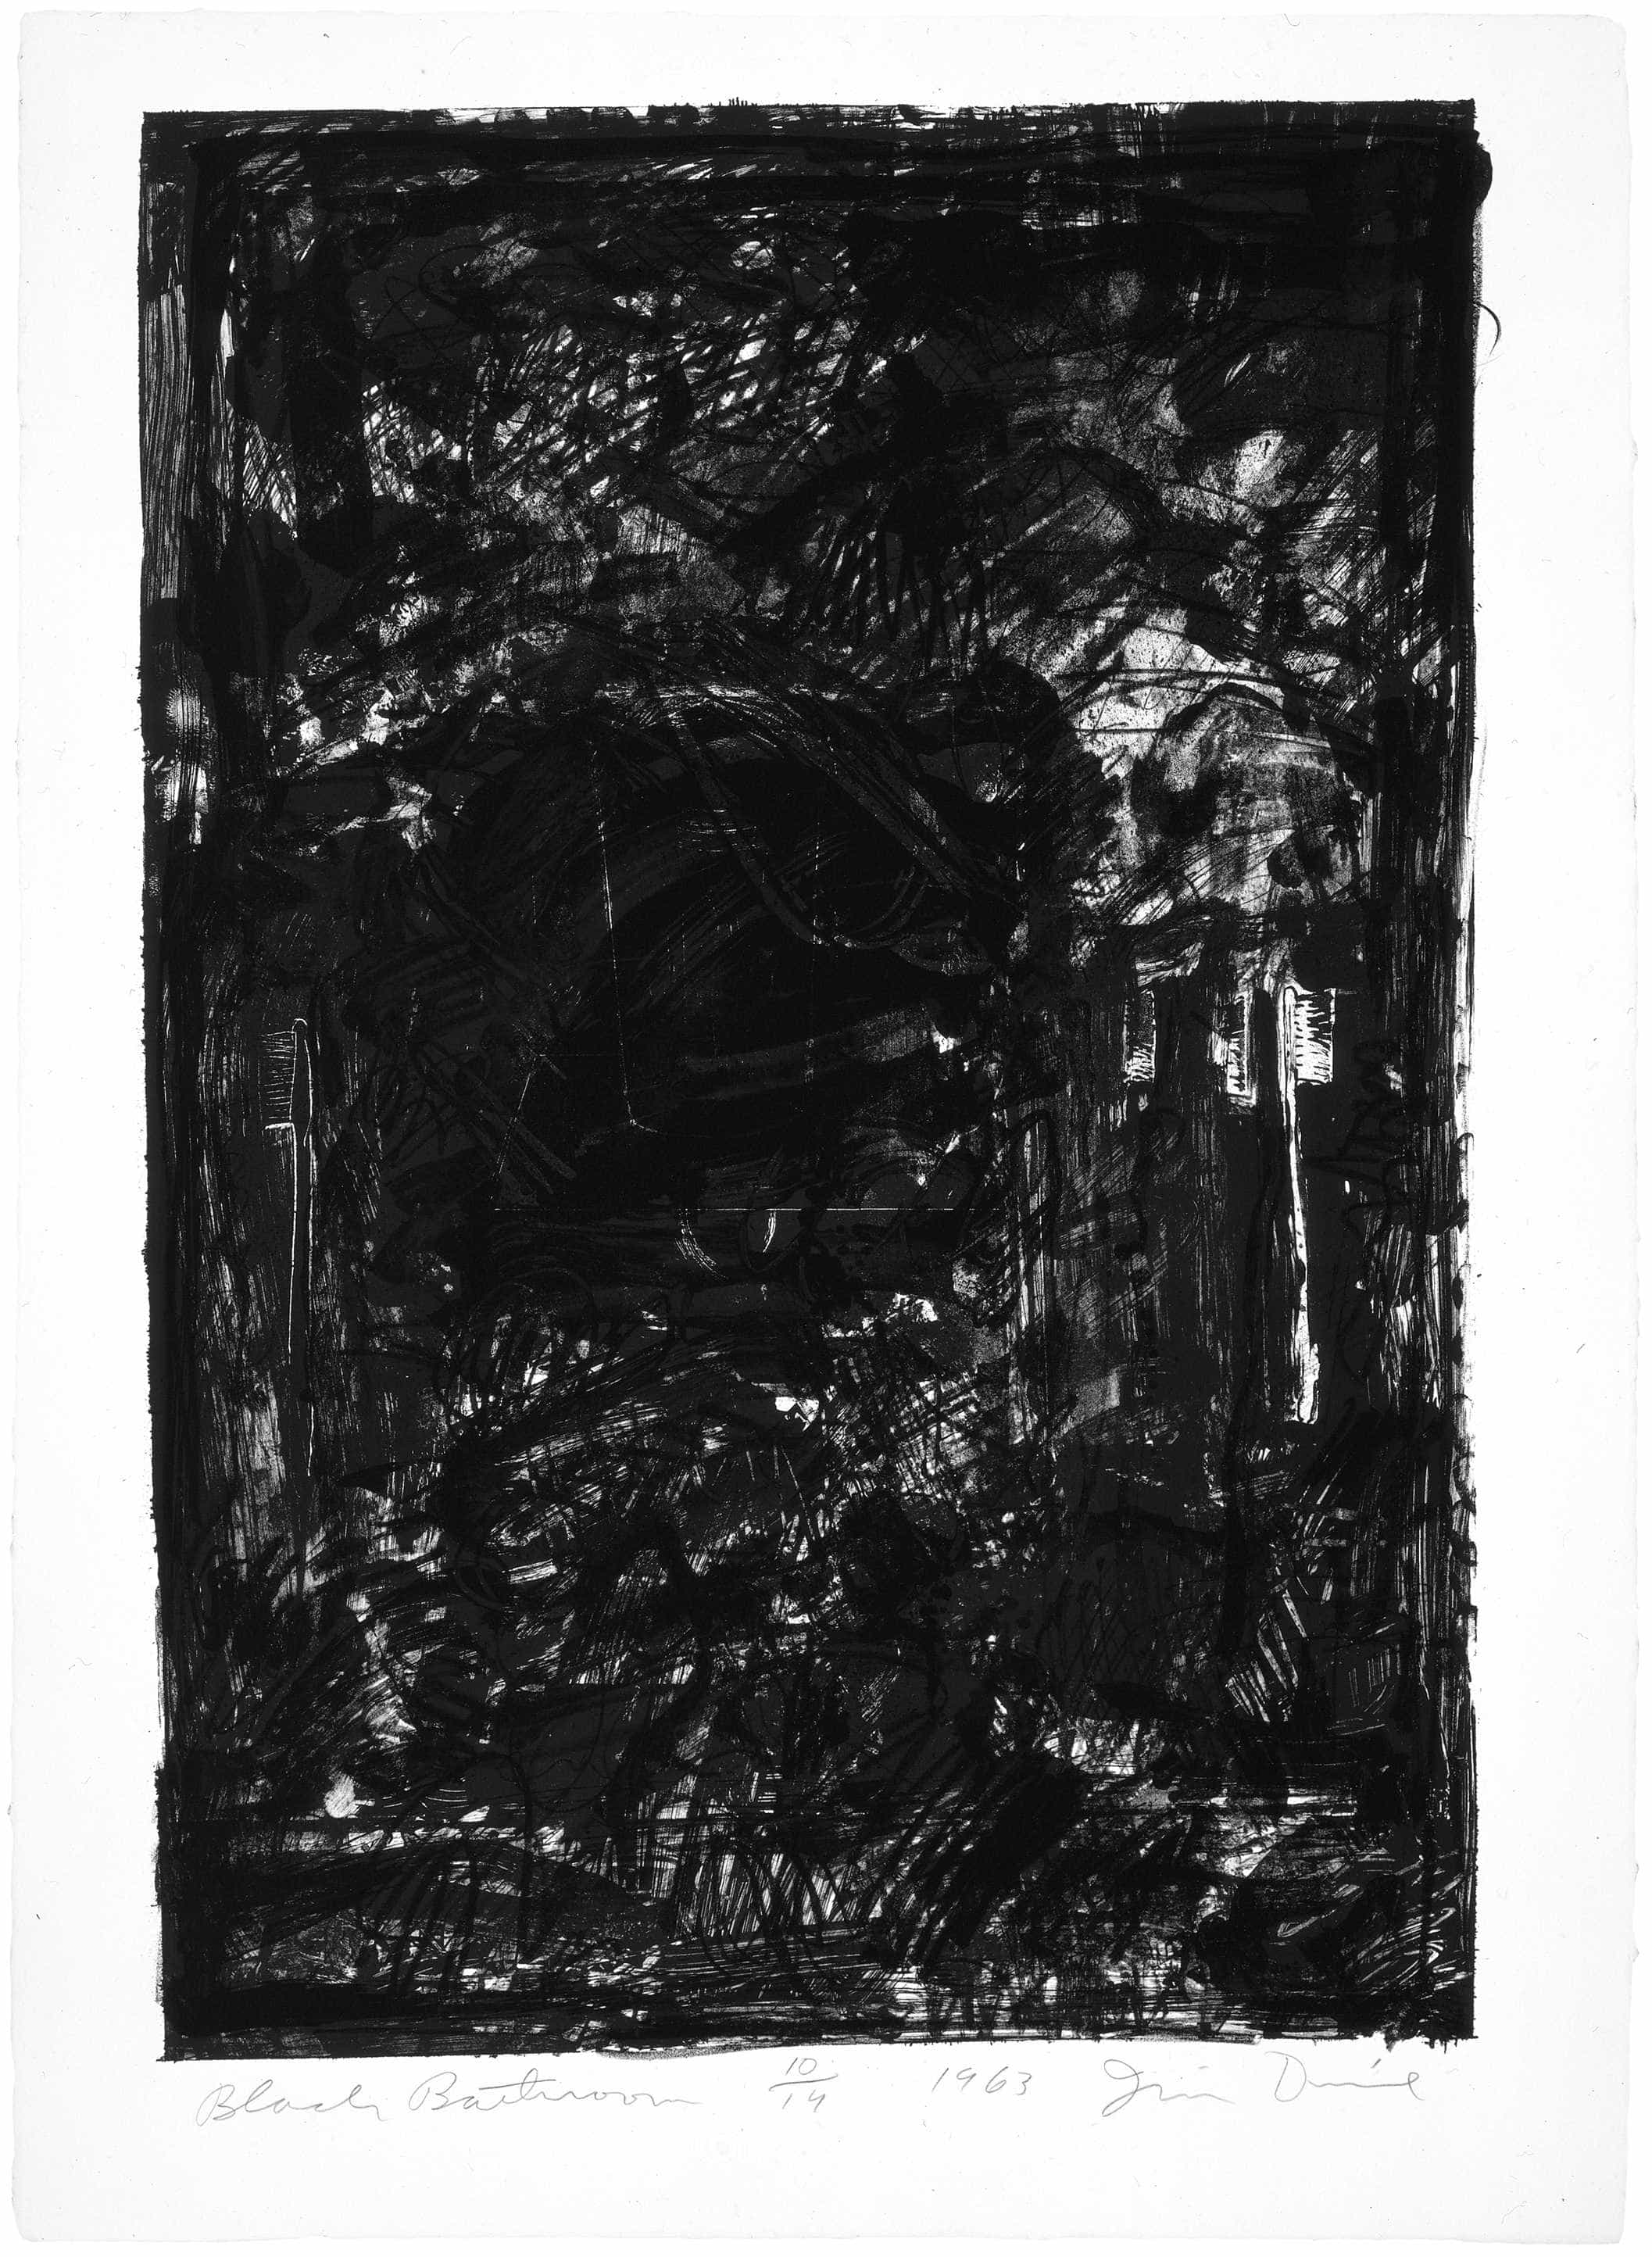 Jim Dine, Black Bathroom, 1963